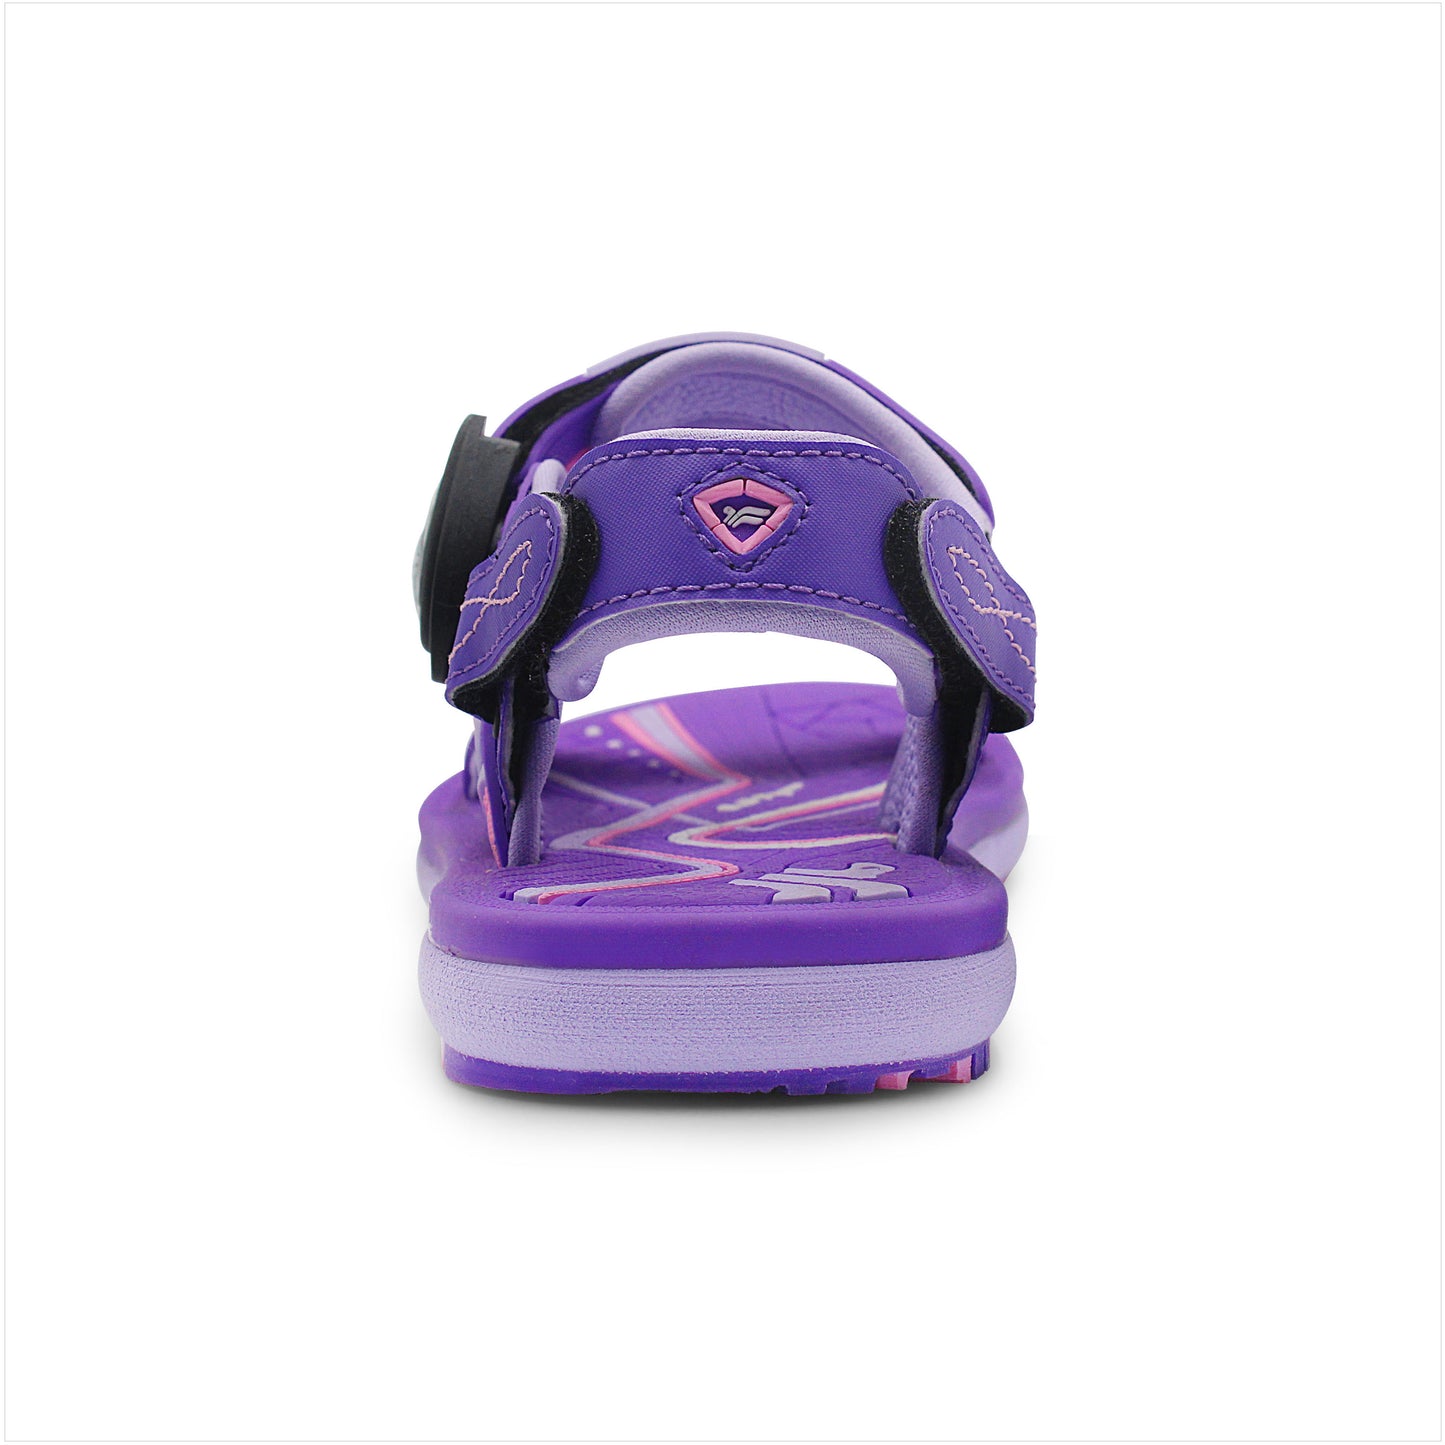 Kids Classic: 9571 Purple